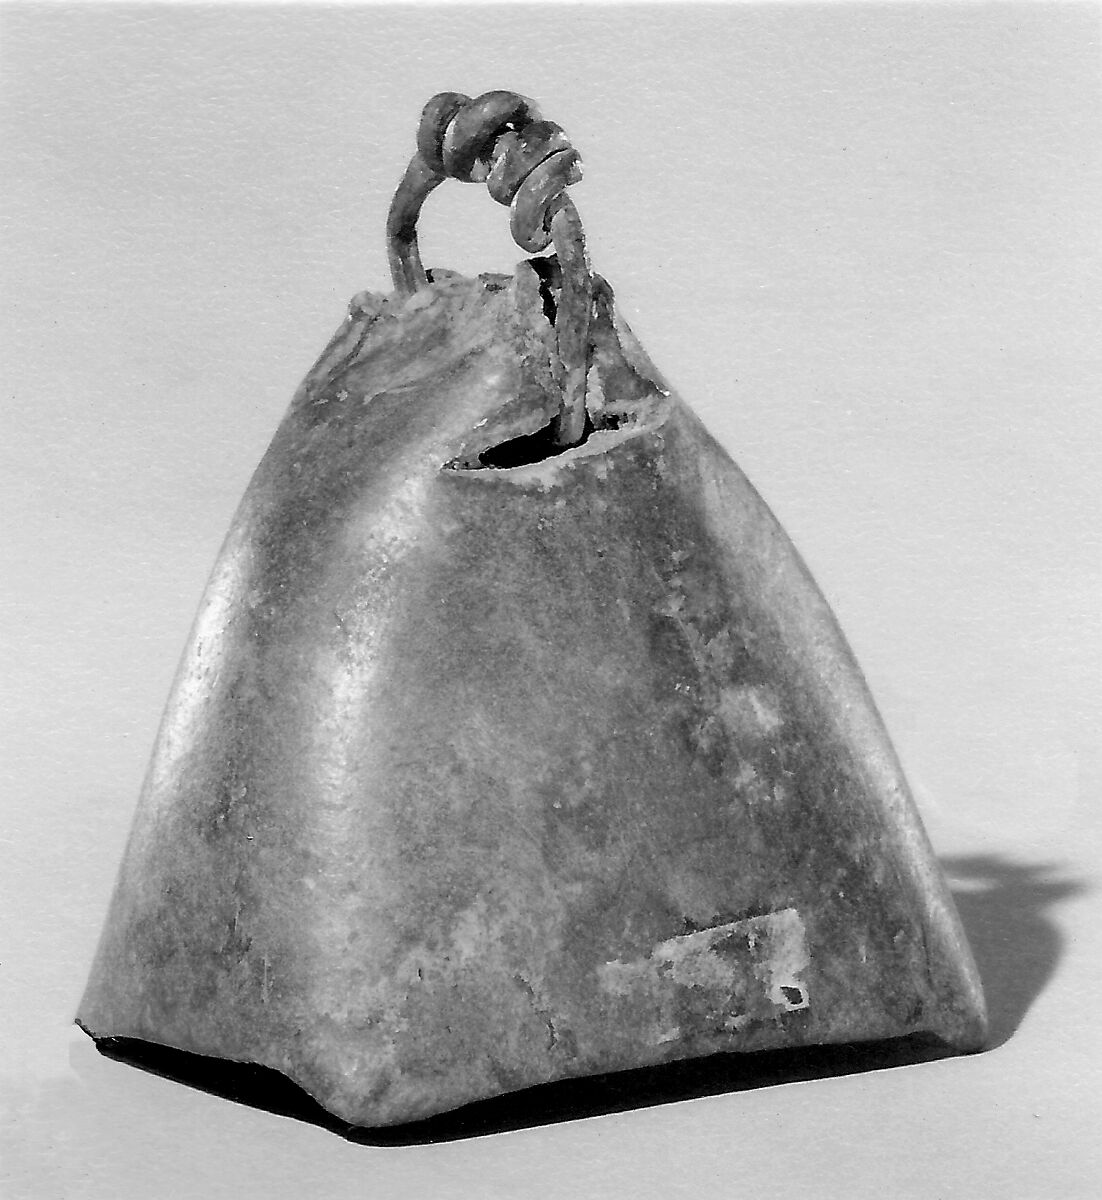 Bell, Metal, Italian (Ancient Roman) 